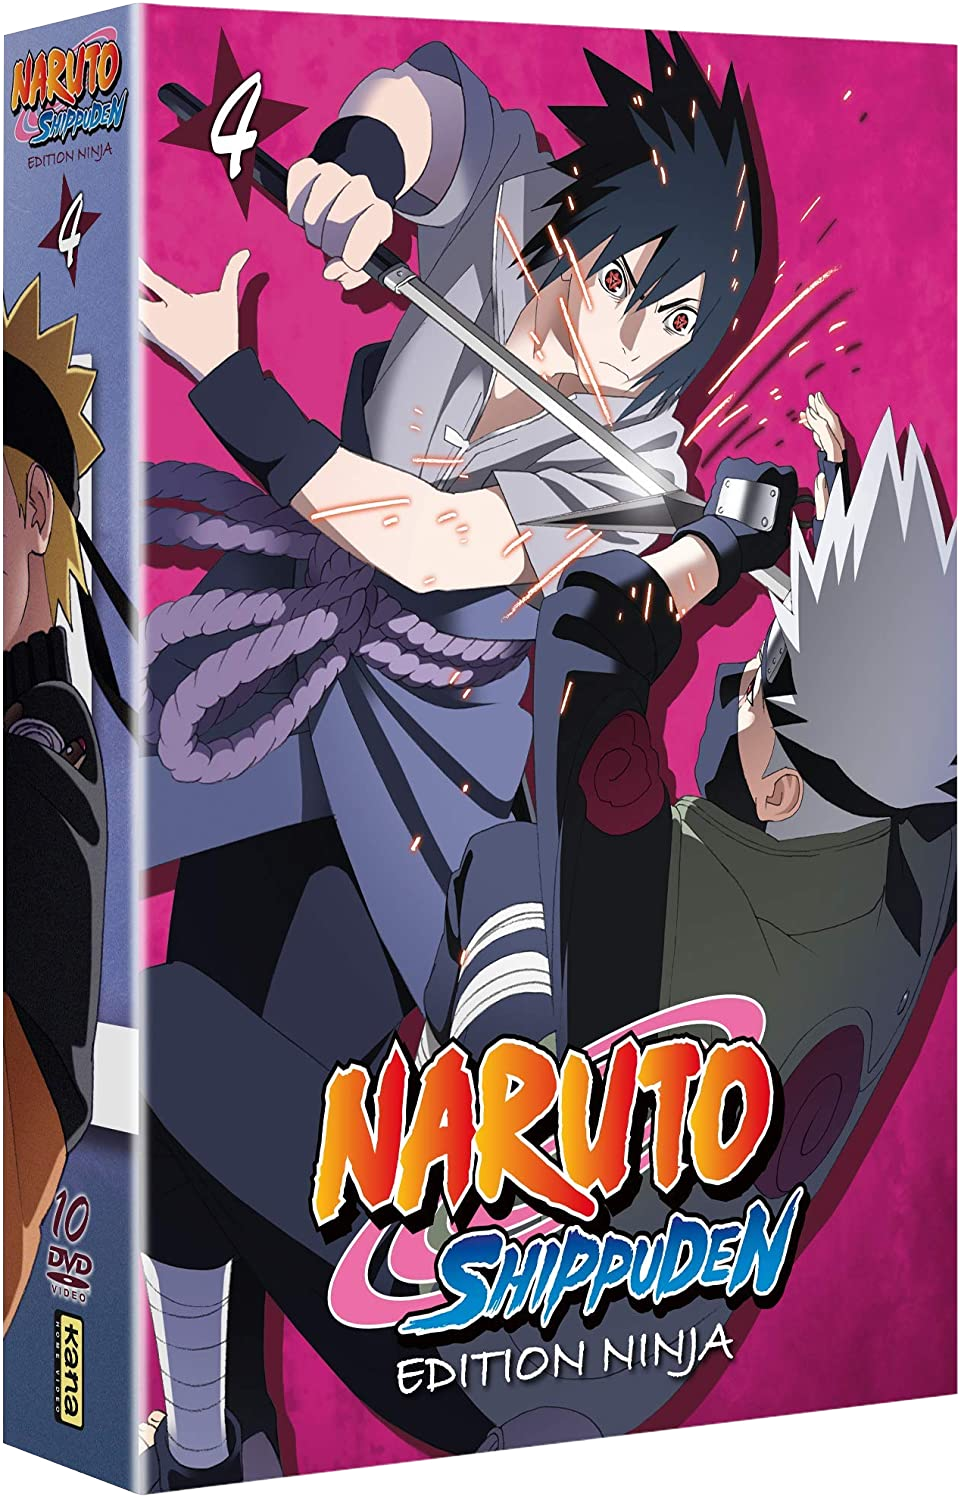 Naruto Shippuden Edition Ninja Coffret 4 [10 DVD]